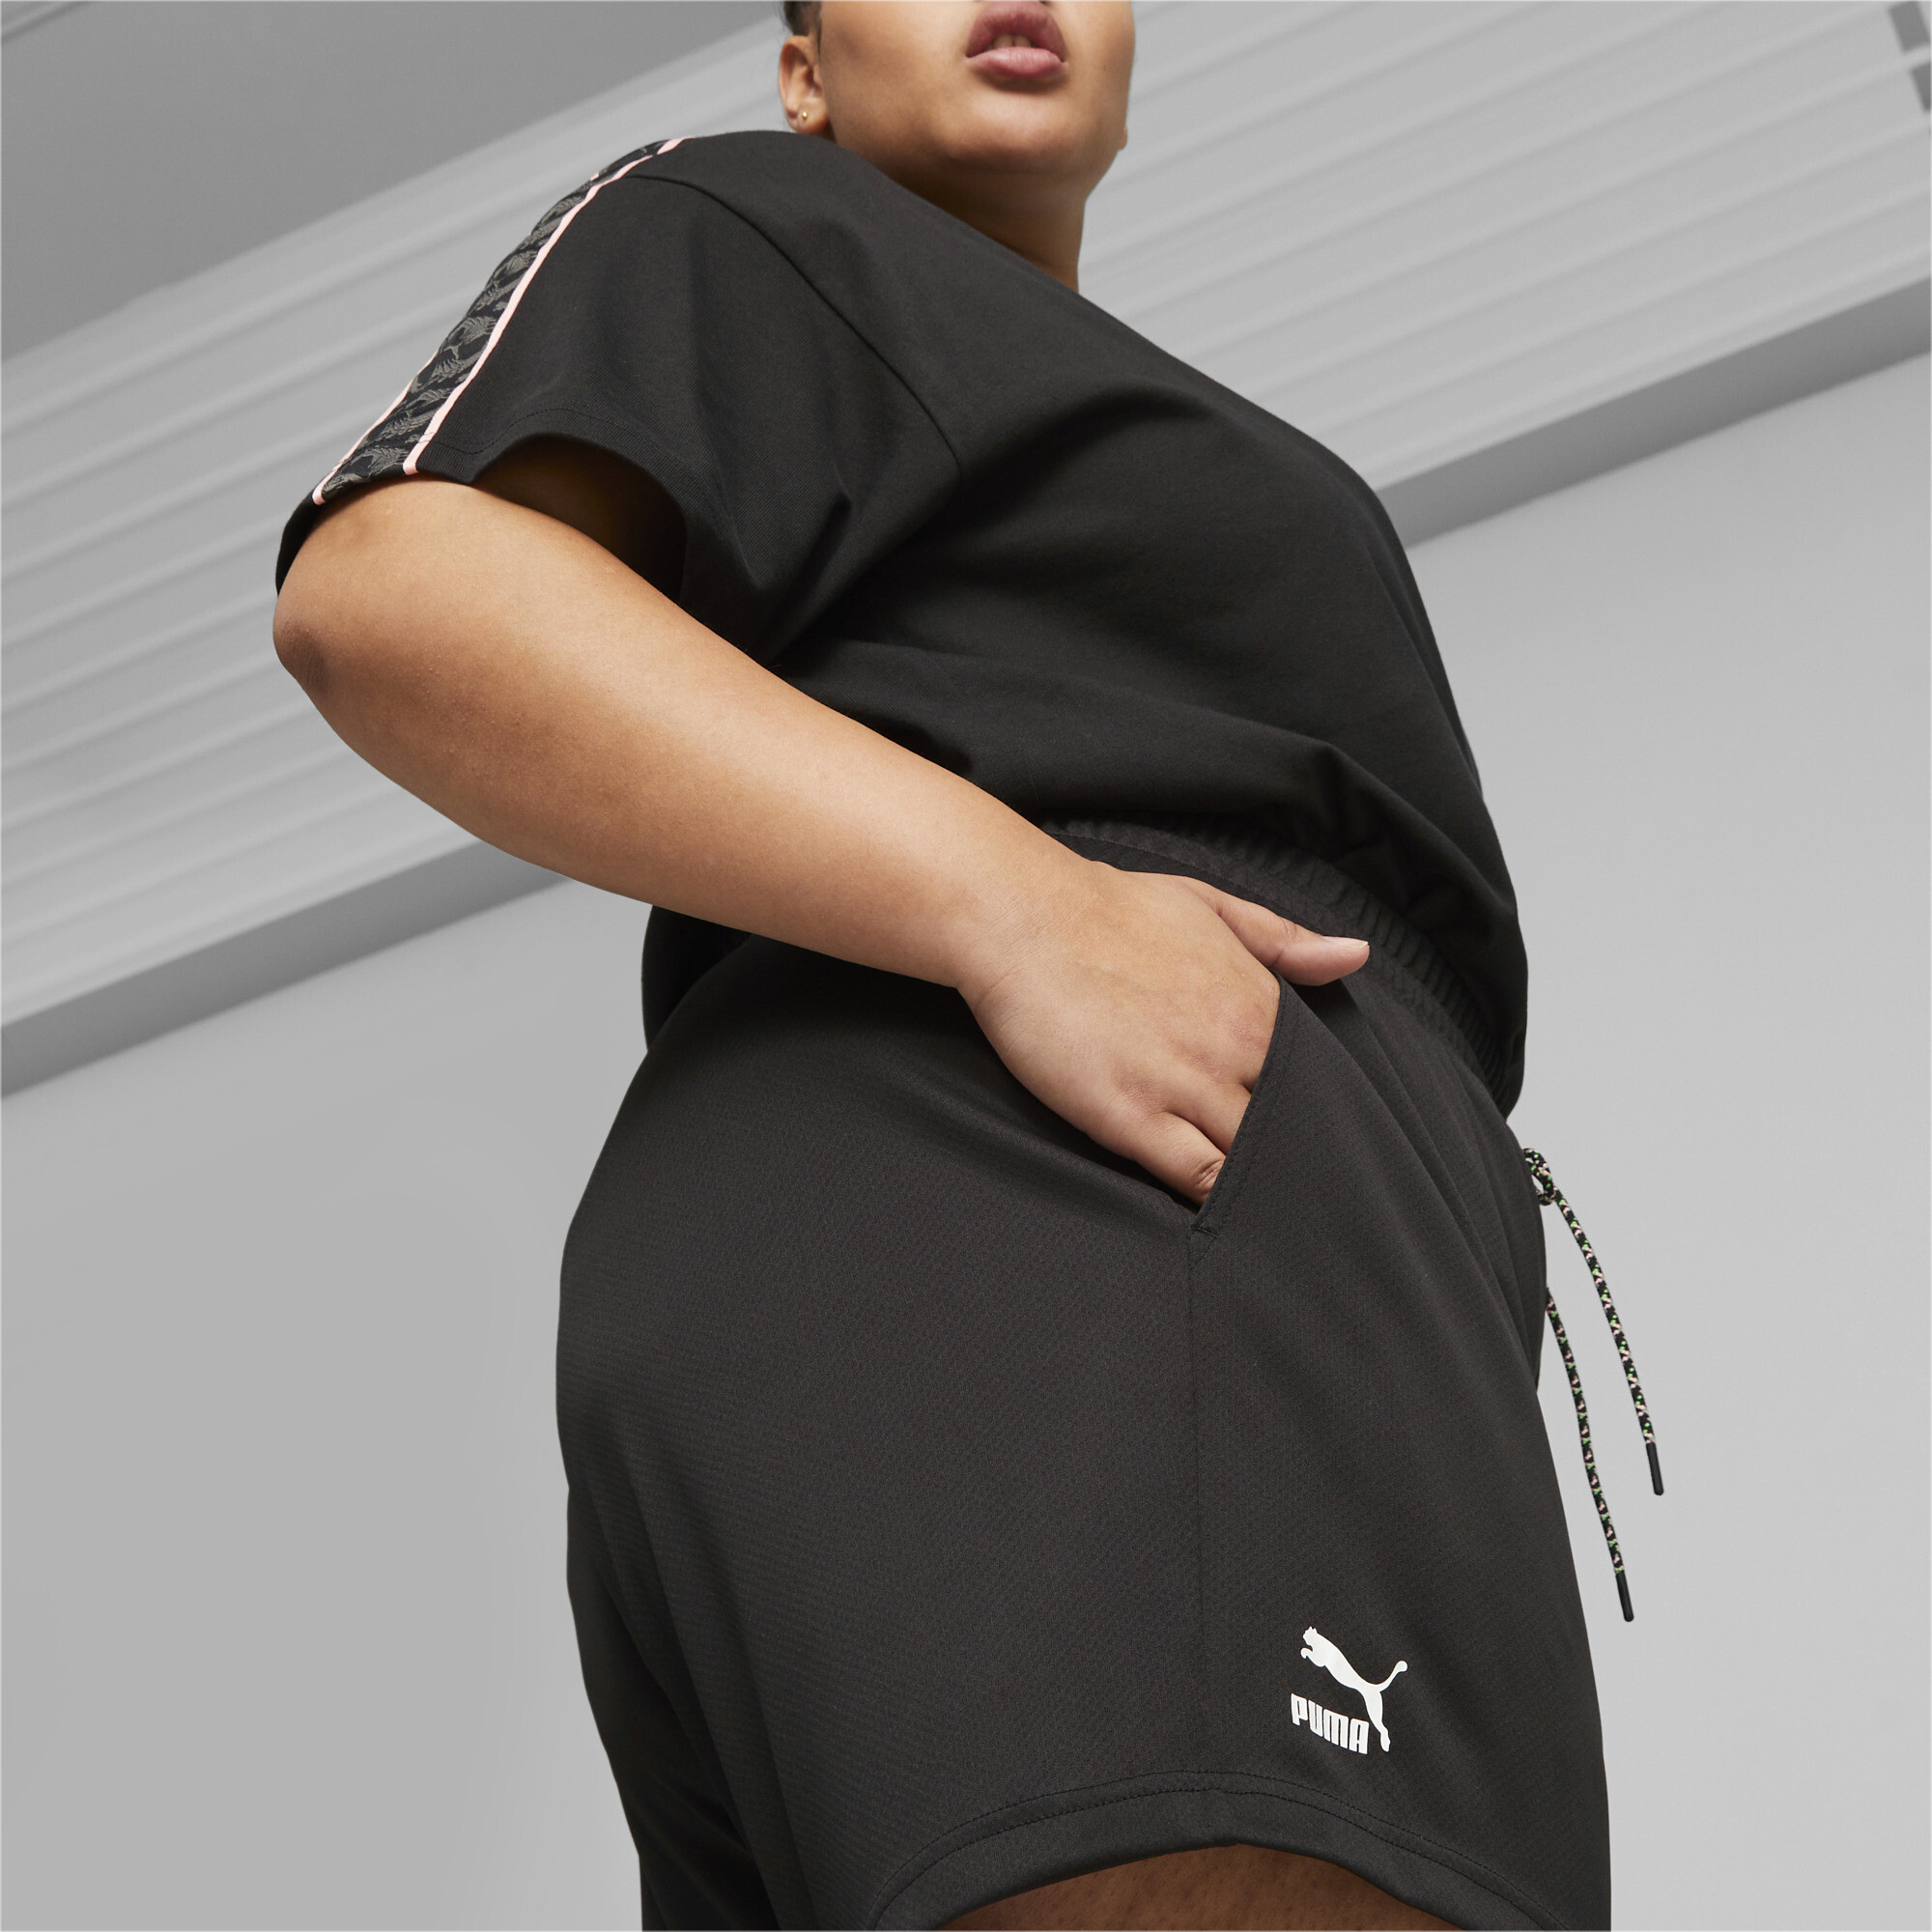 Women's PUMA Dare To Football Shorts In Black, Size XL